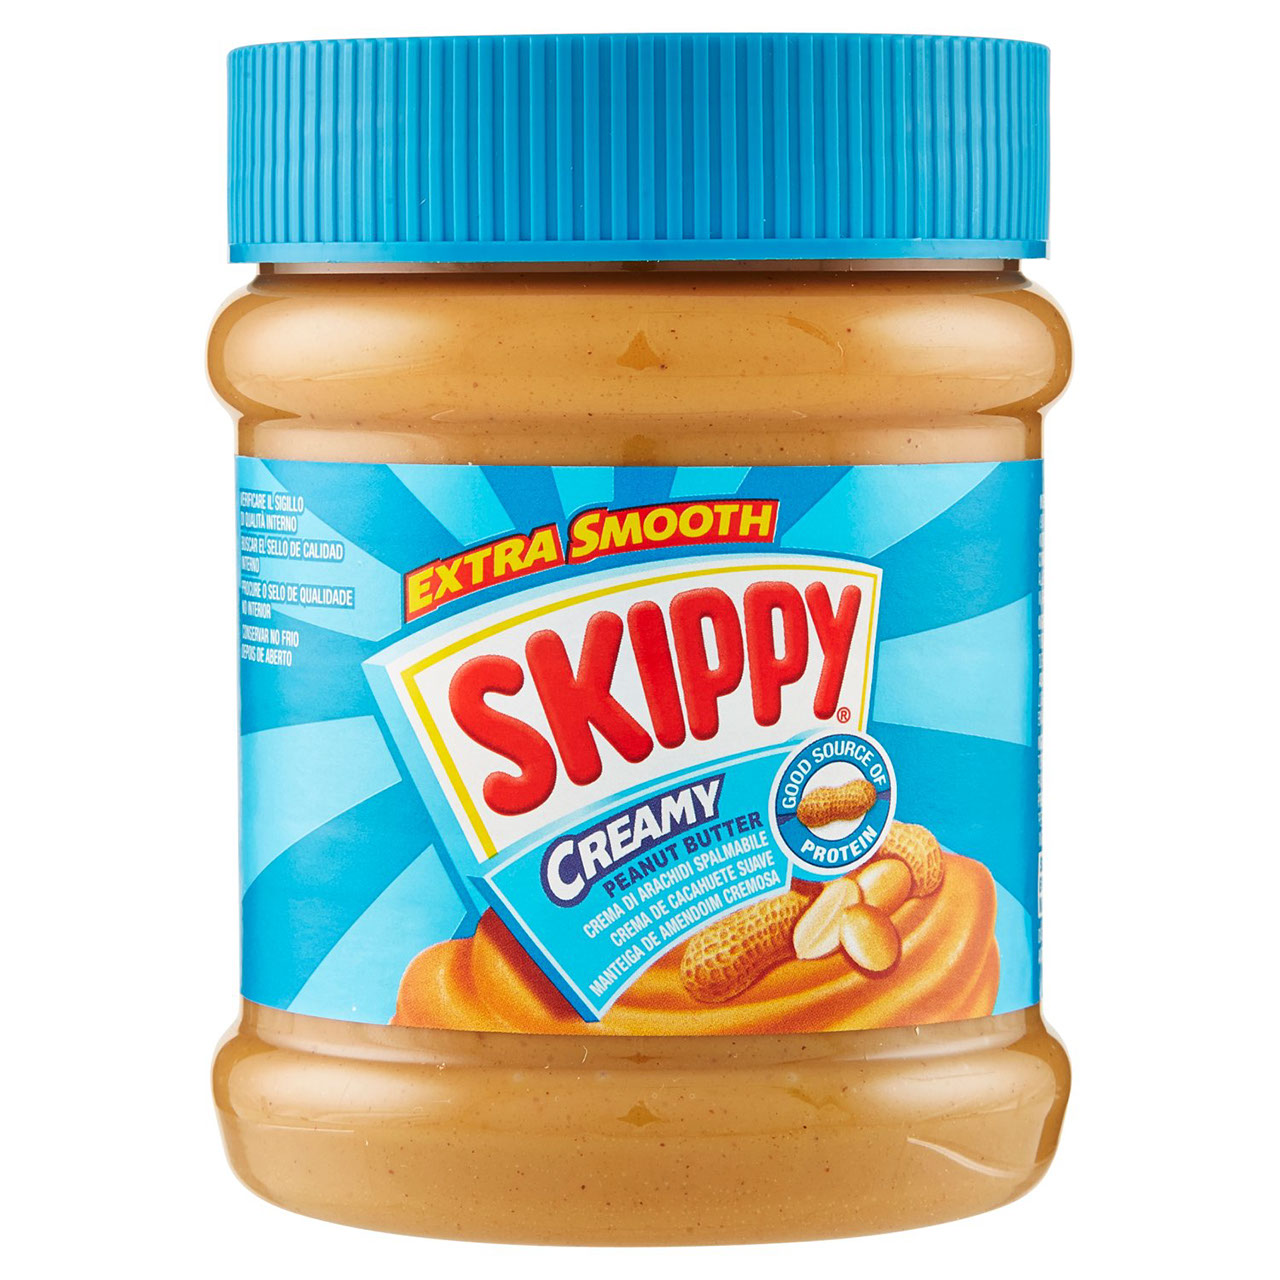 Skippy Creamy Peanut Butter 340 g